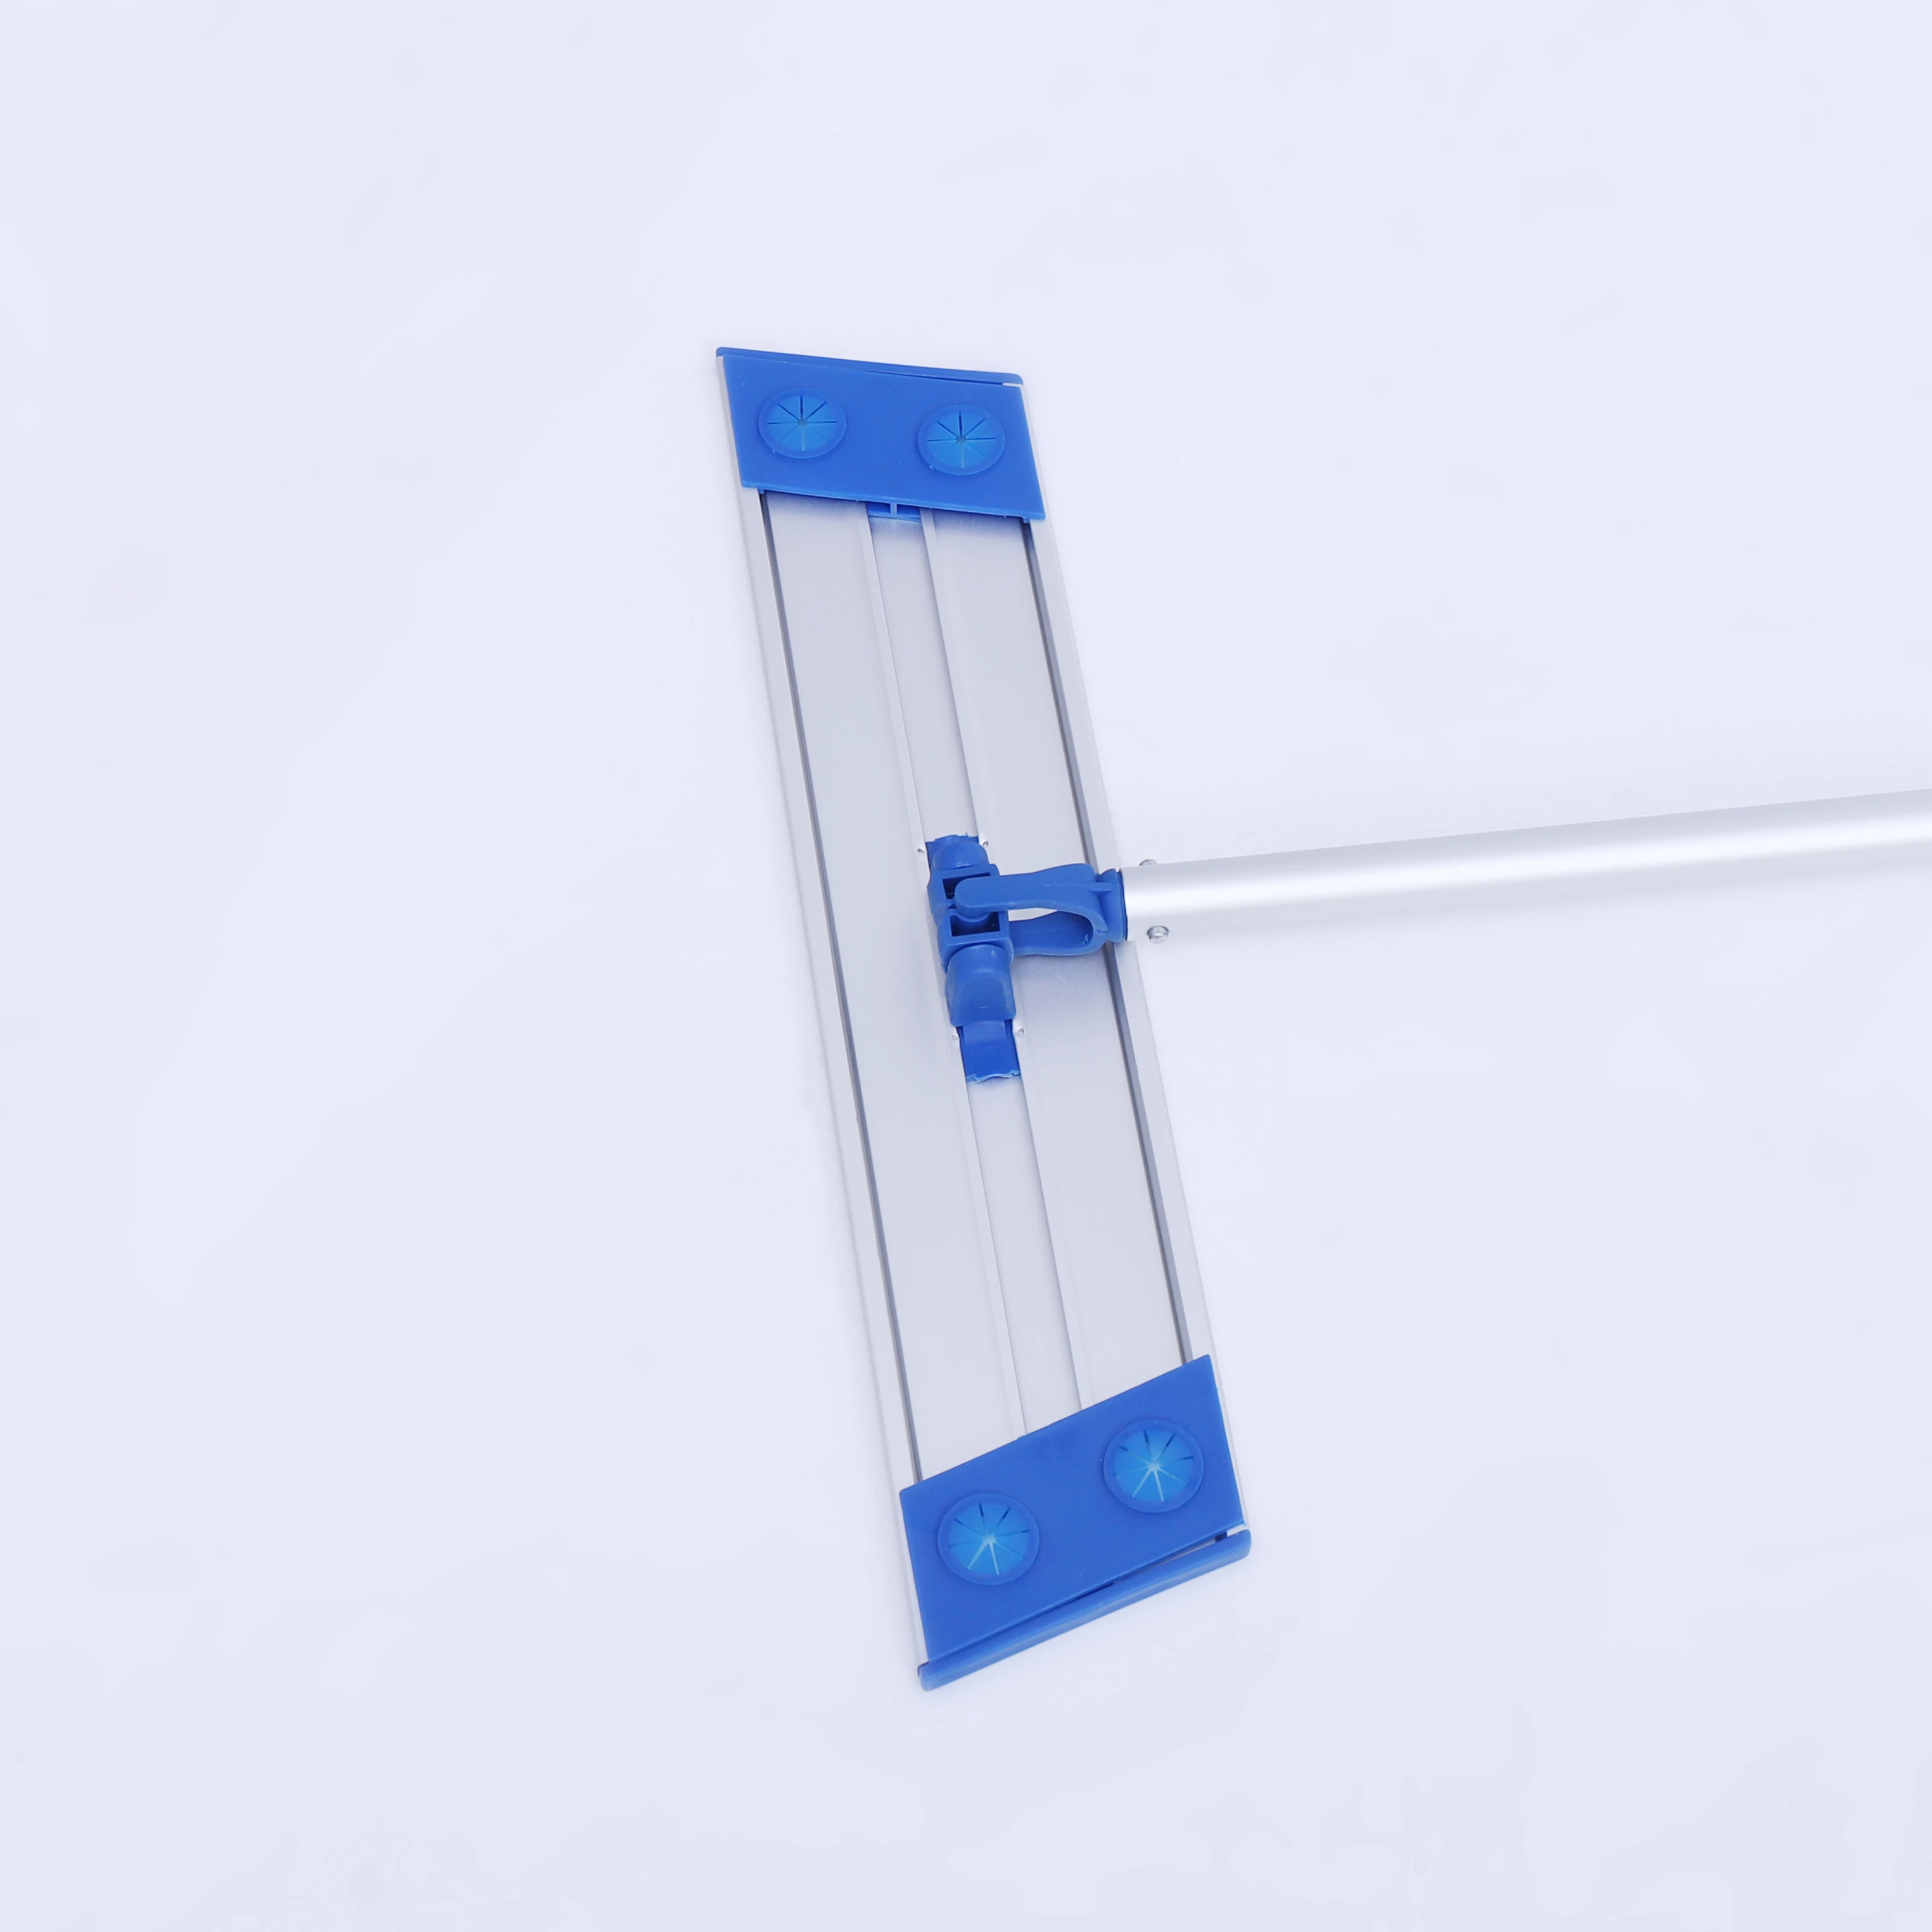 
Easy use 360 swivel aluminum flat mop with telescopic handle 